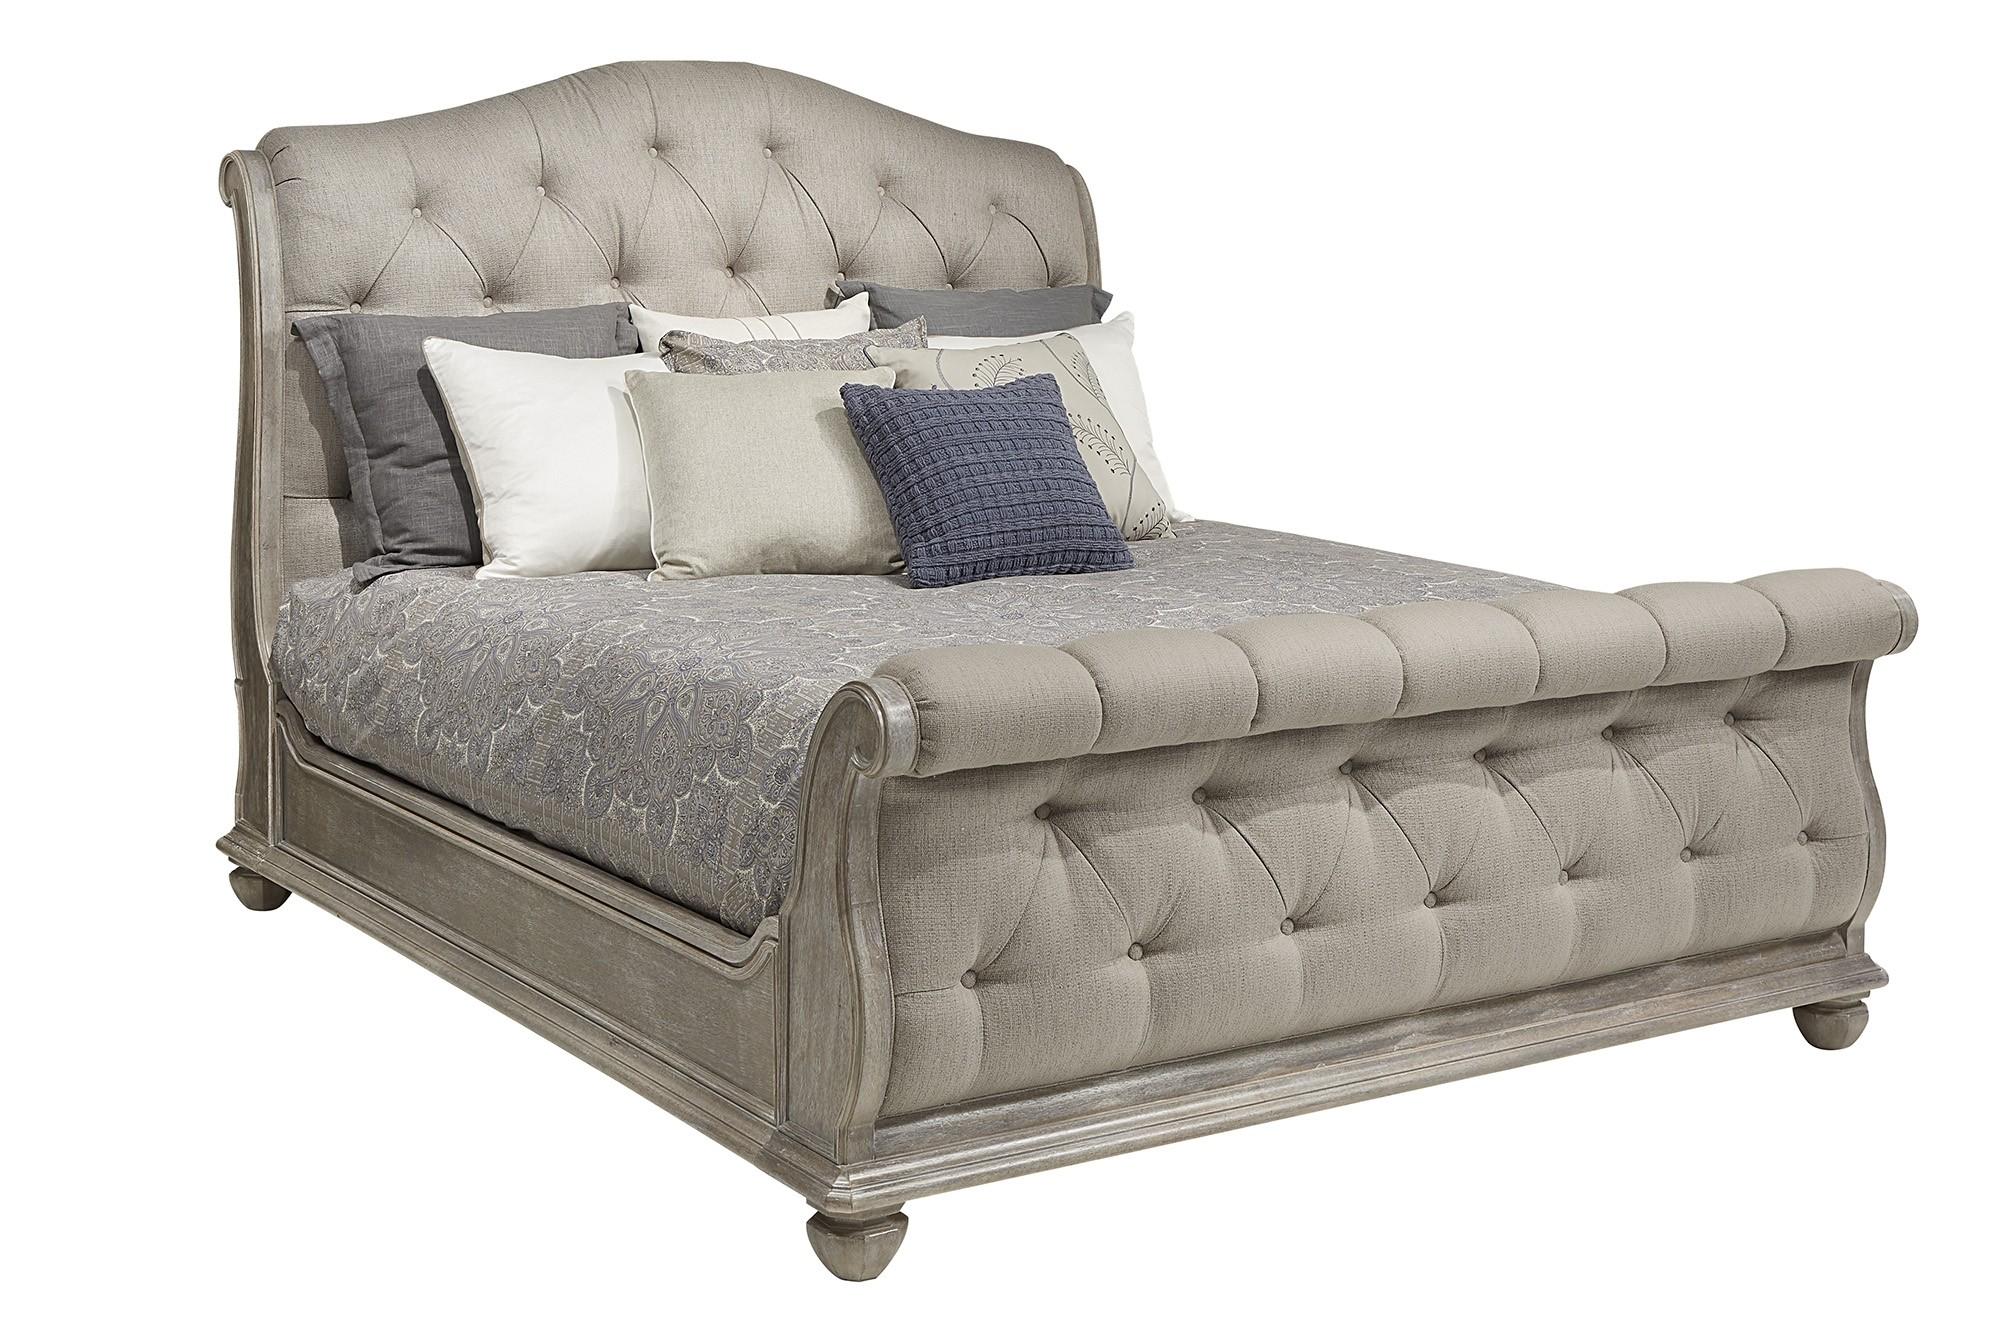 

    
Traditional Oak Finish Tufted Upholstered King Sleigh Bedroom Set 5Pcs HD-80005
